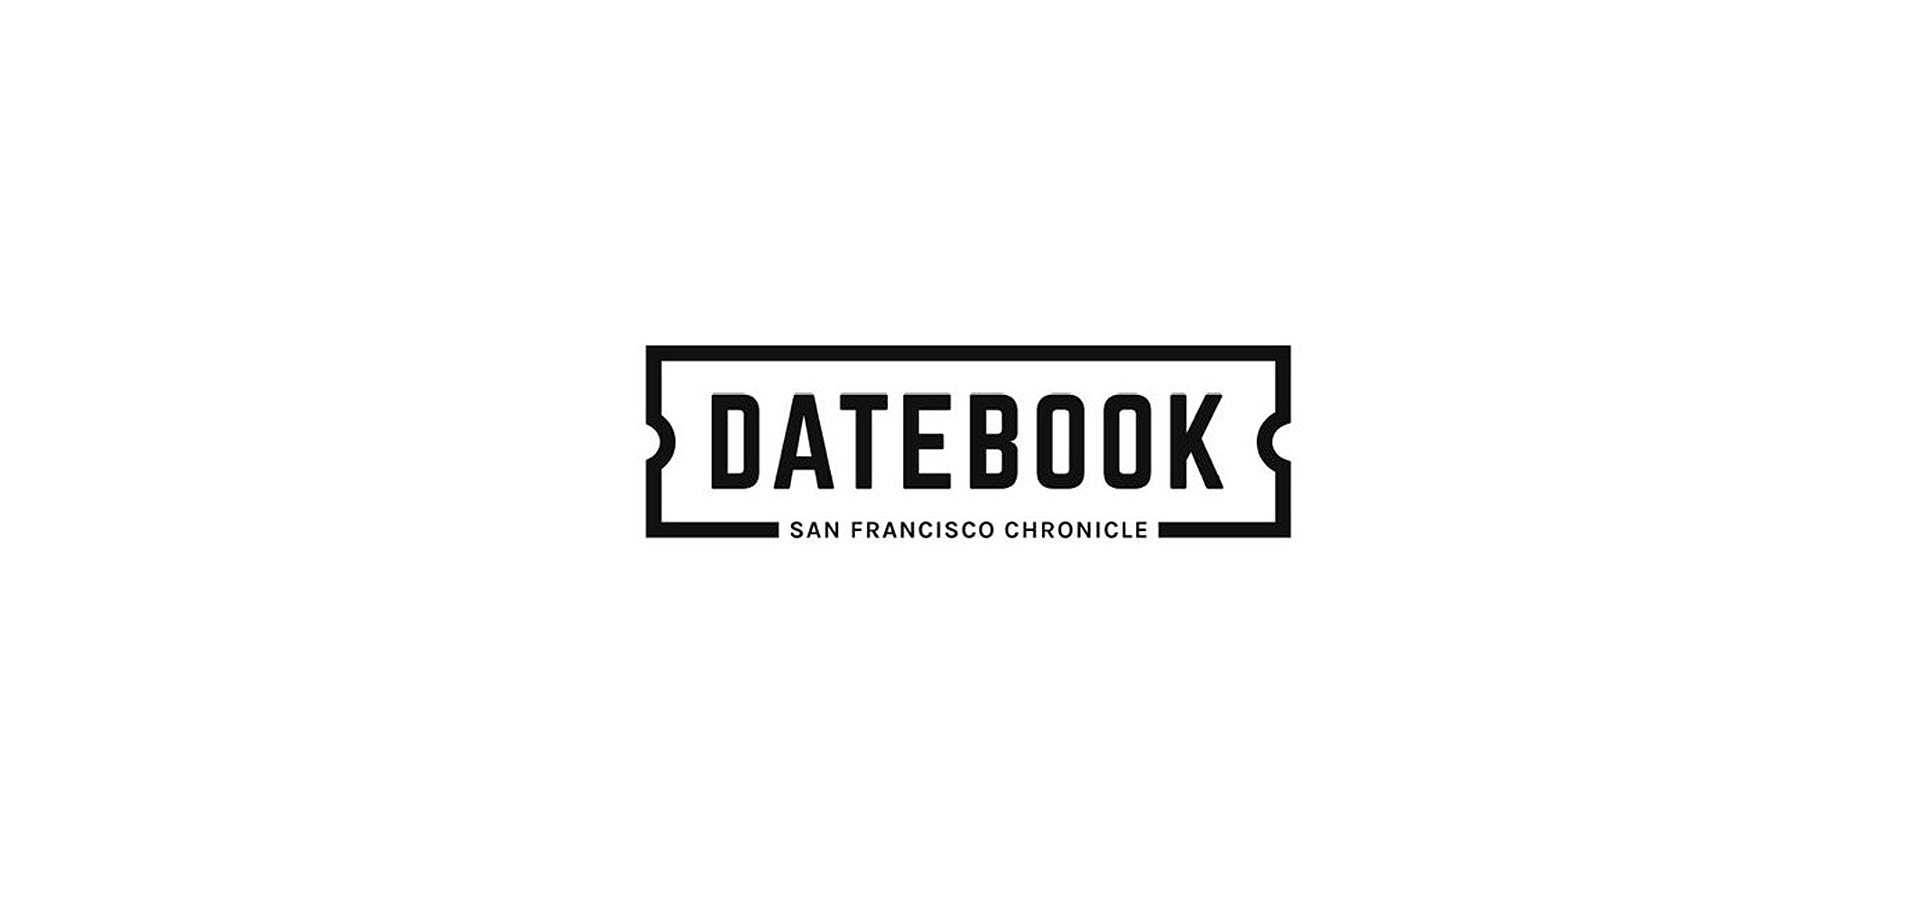 Datebook San Francisco Chronicle logo